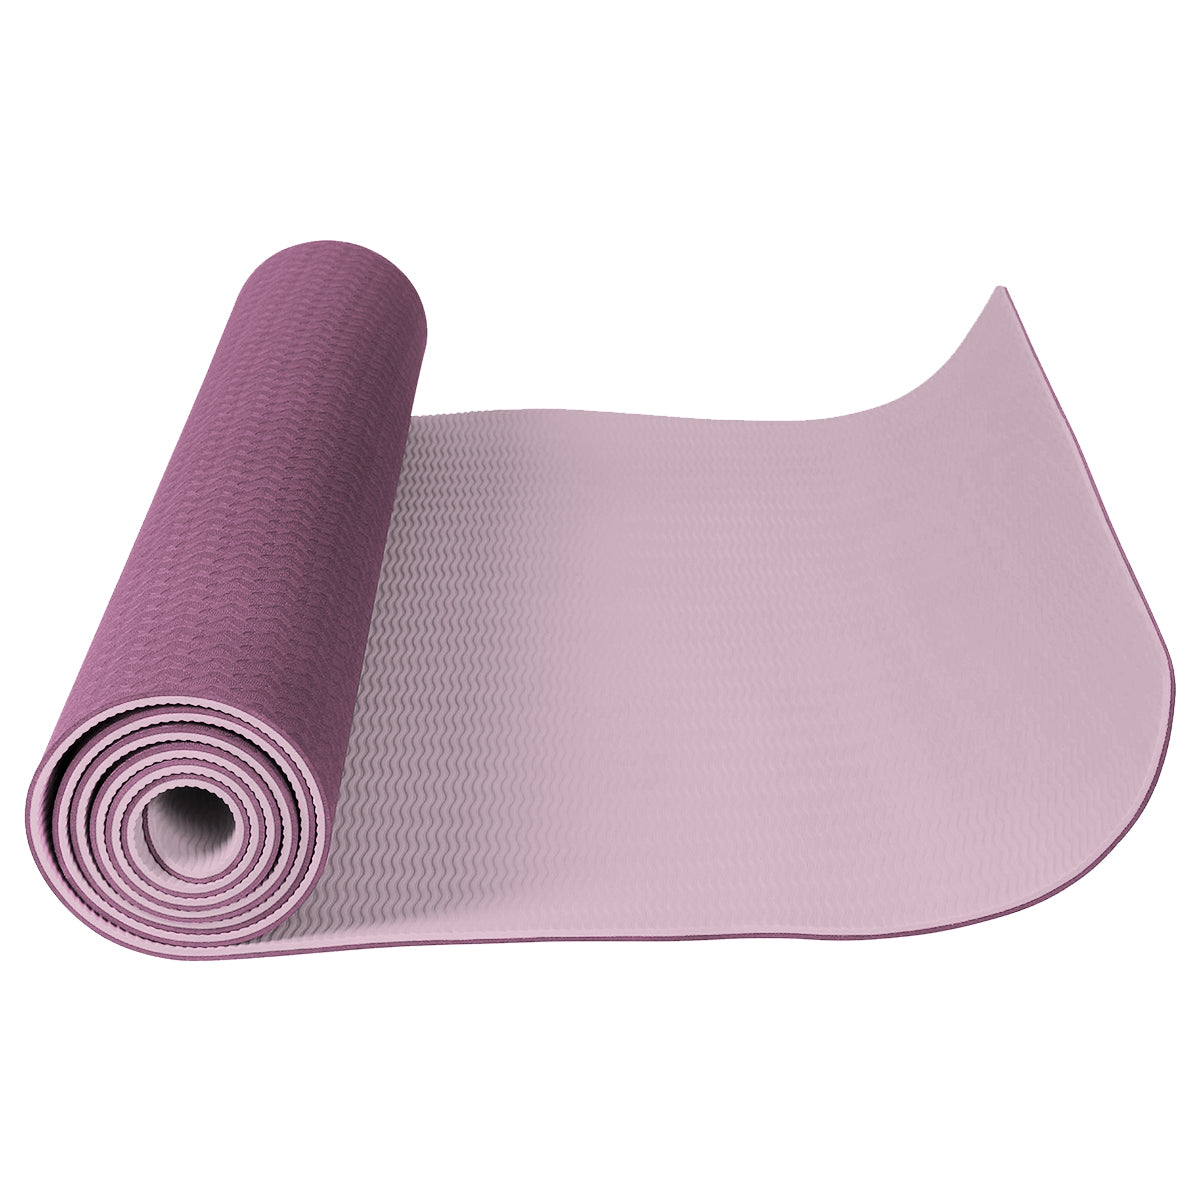 The Best Yoga Mat Straps - Durable, Adjustable, Multiuse